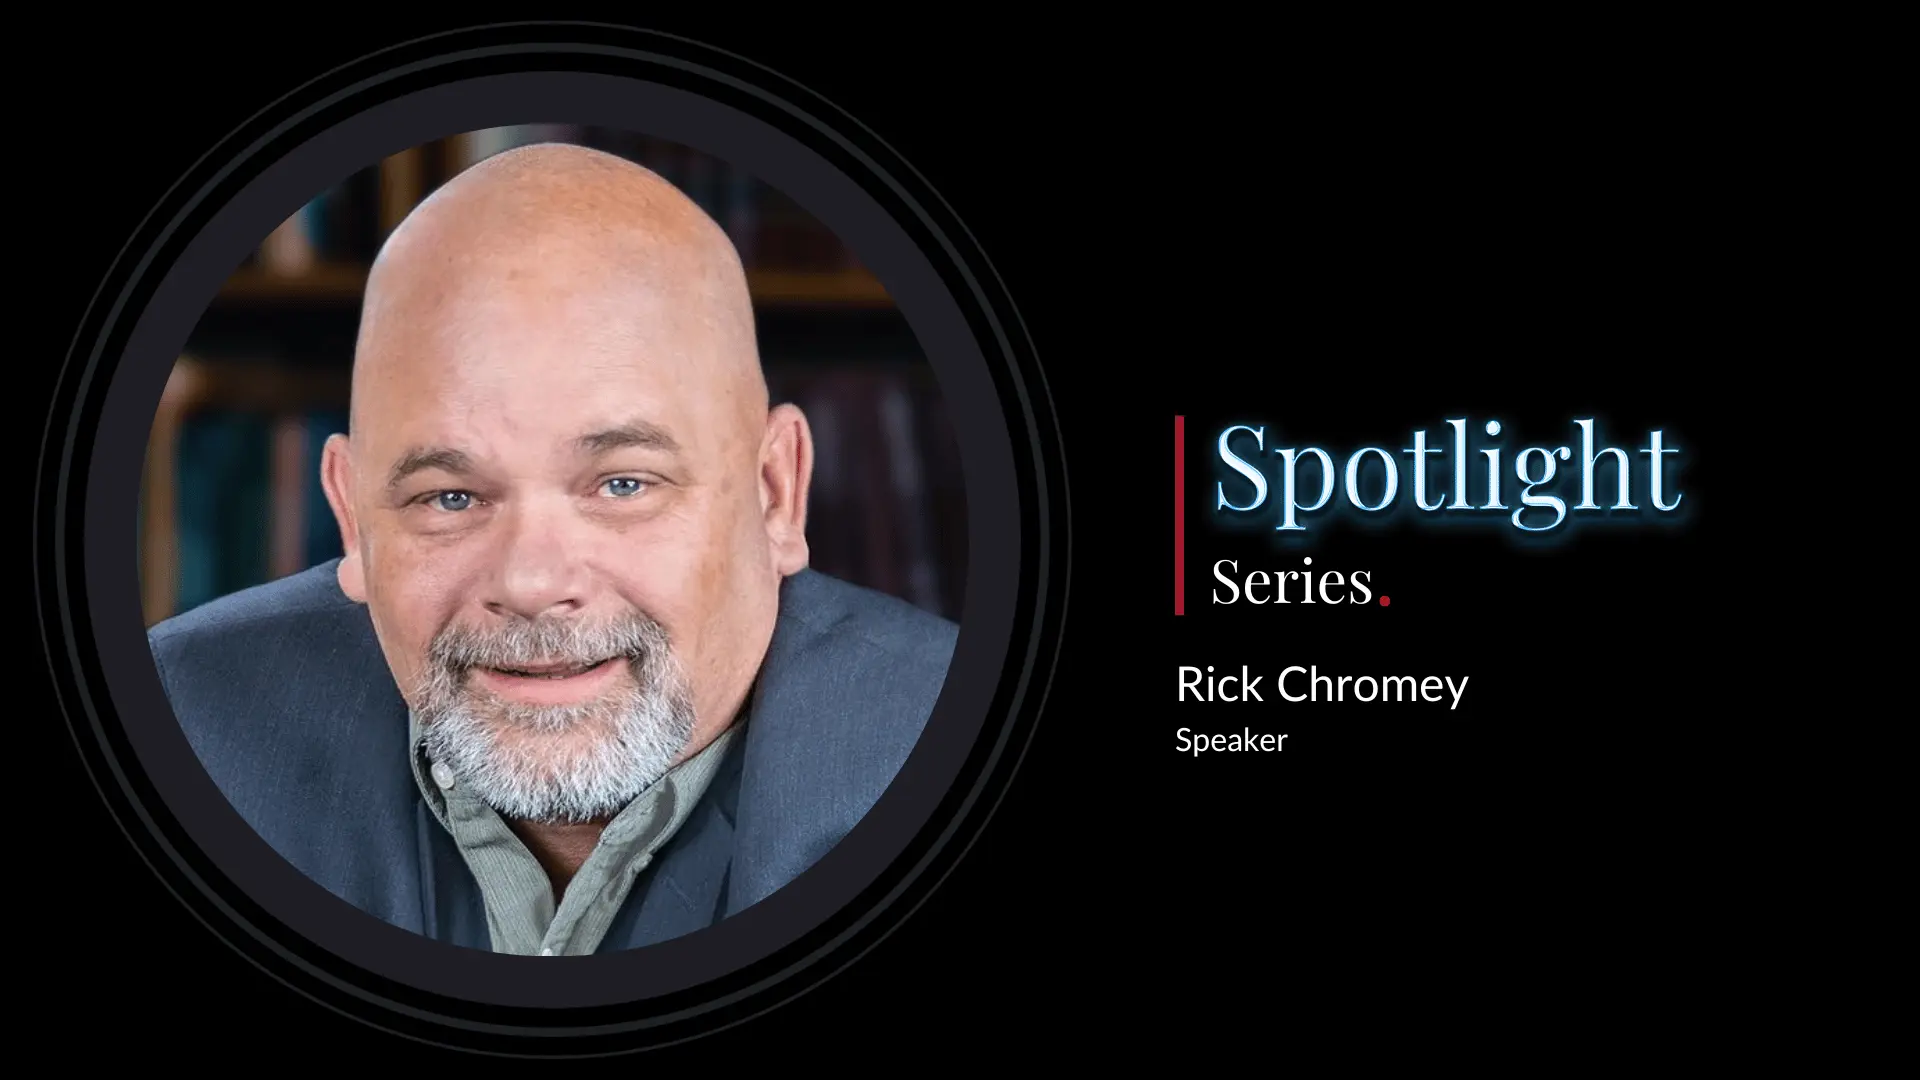 Rick Chromey